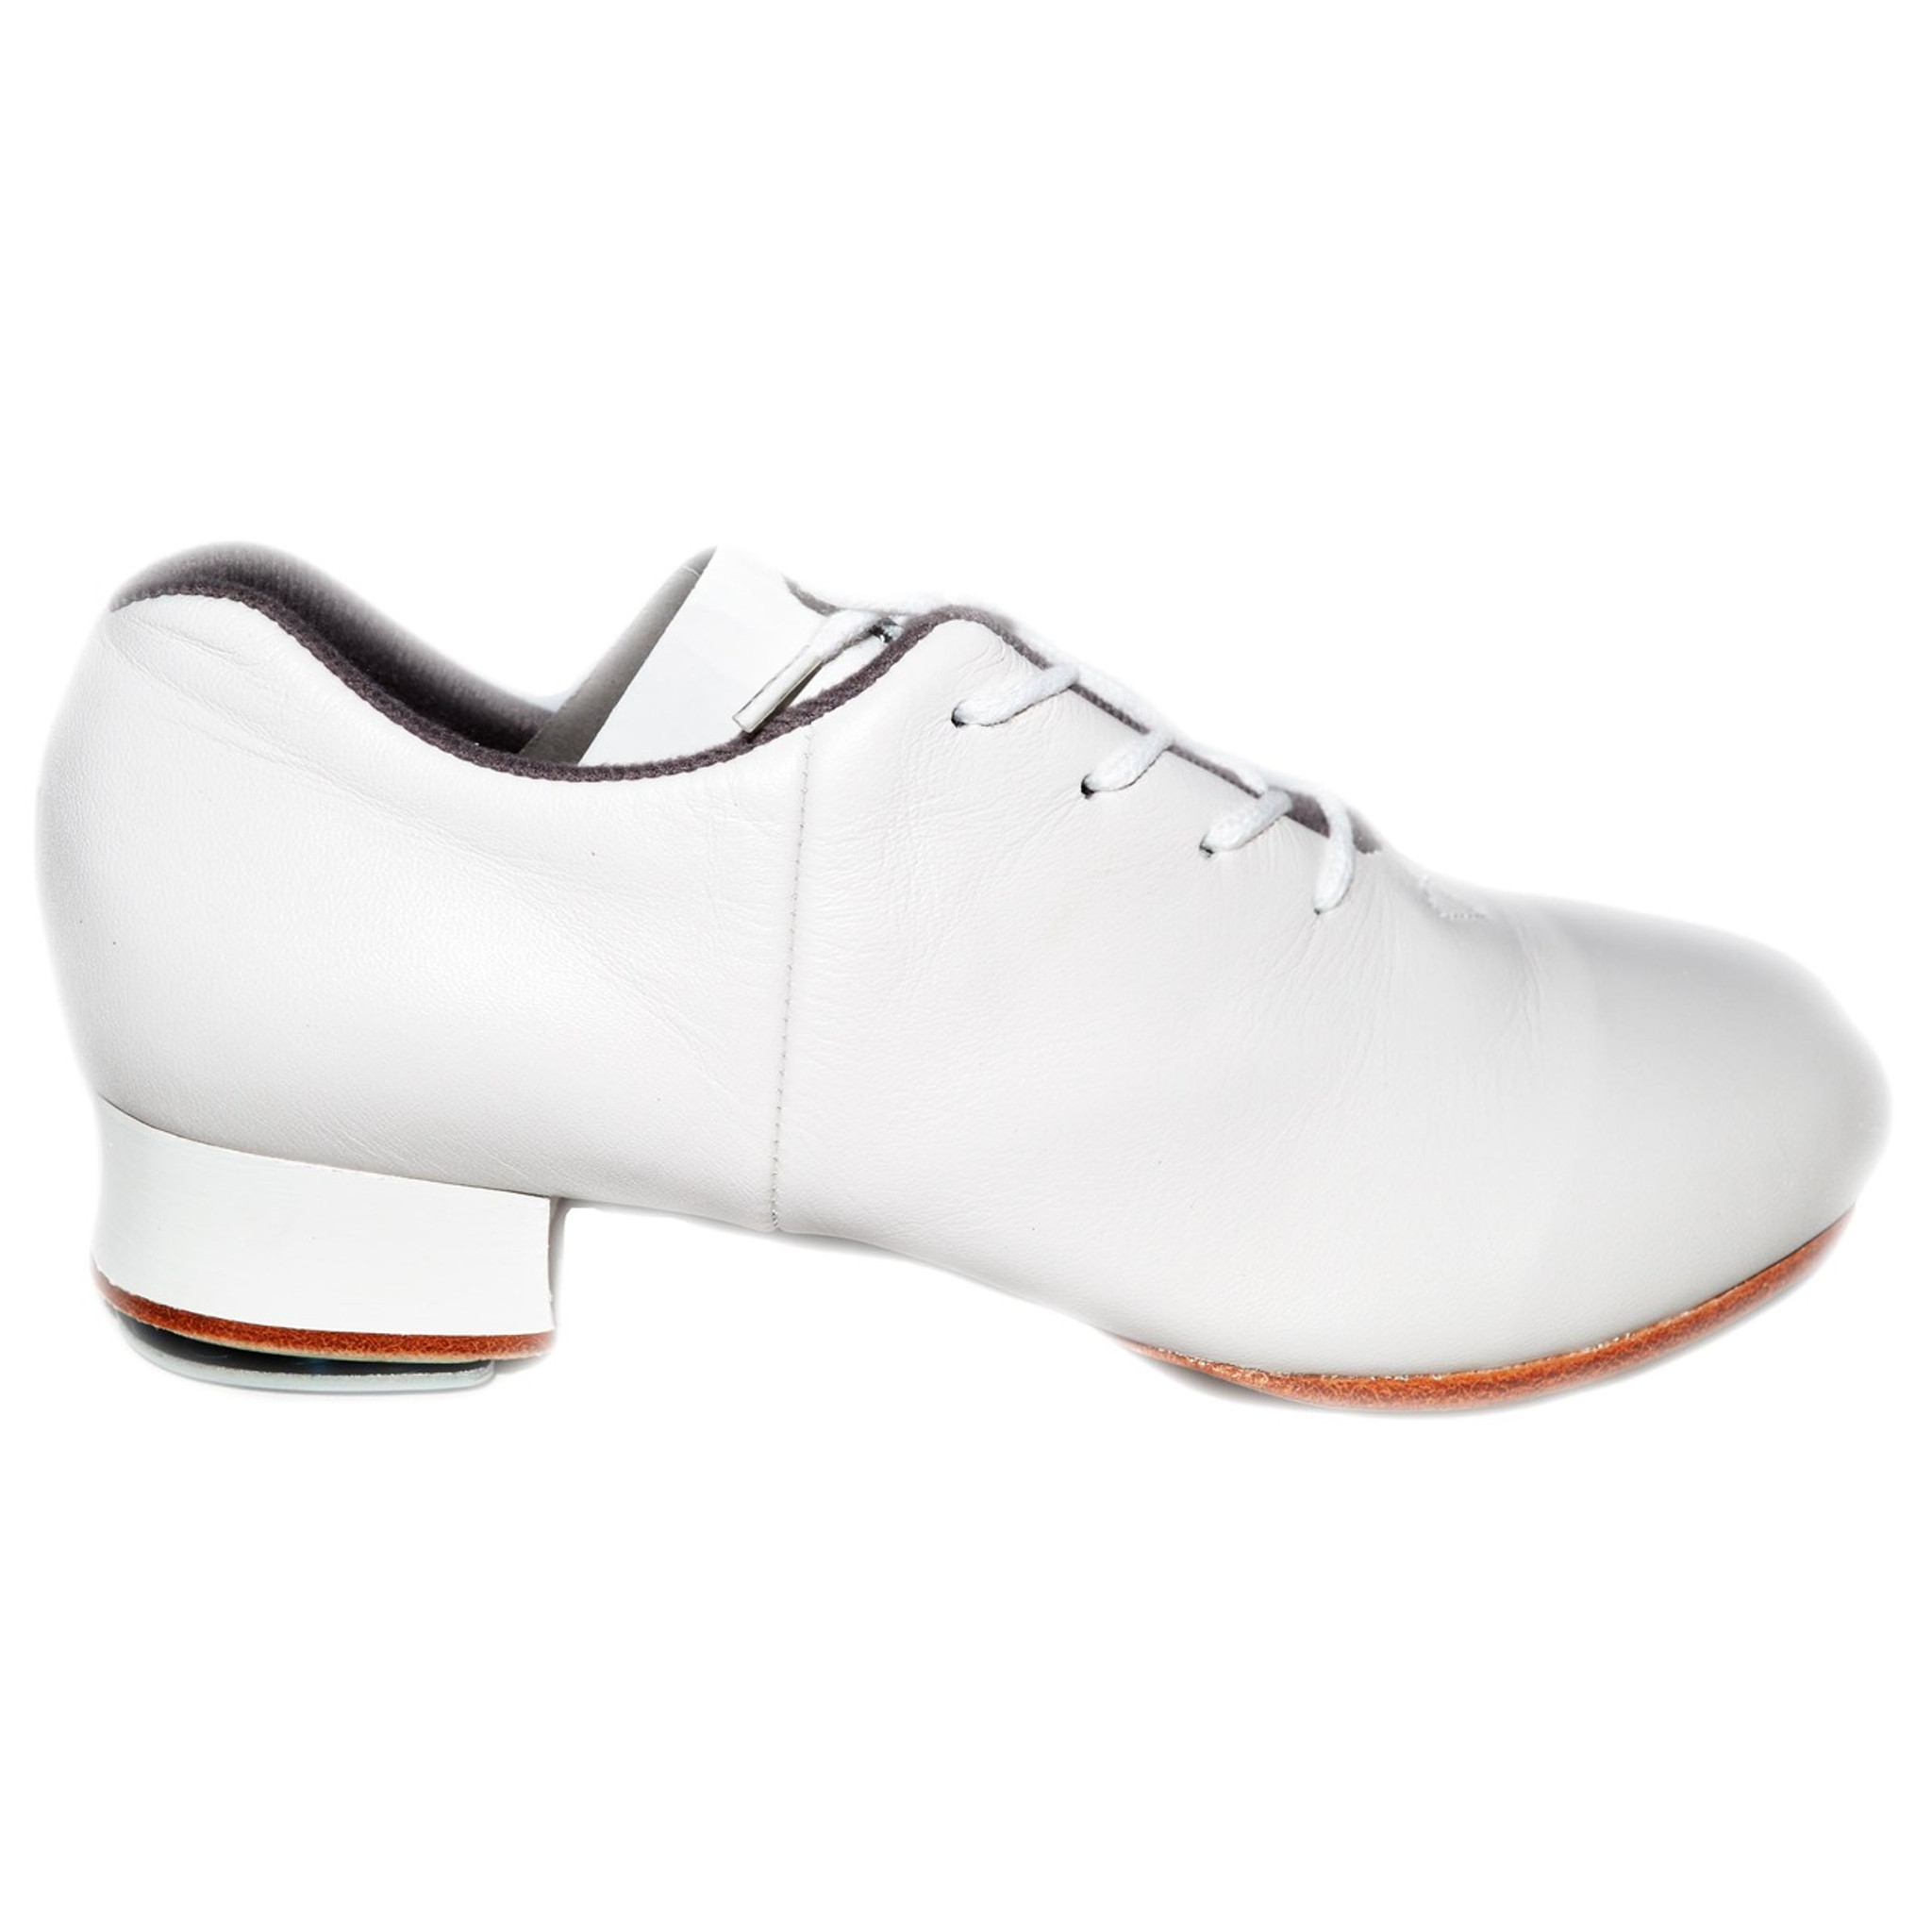 dance shoes for sale online